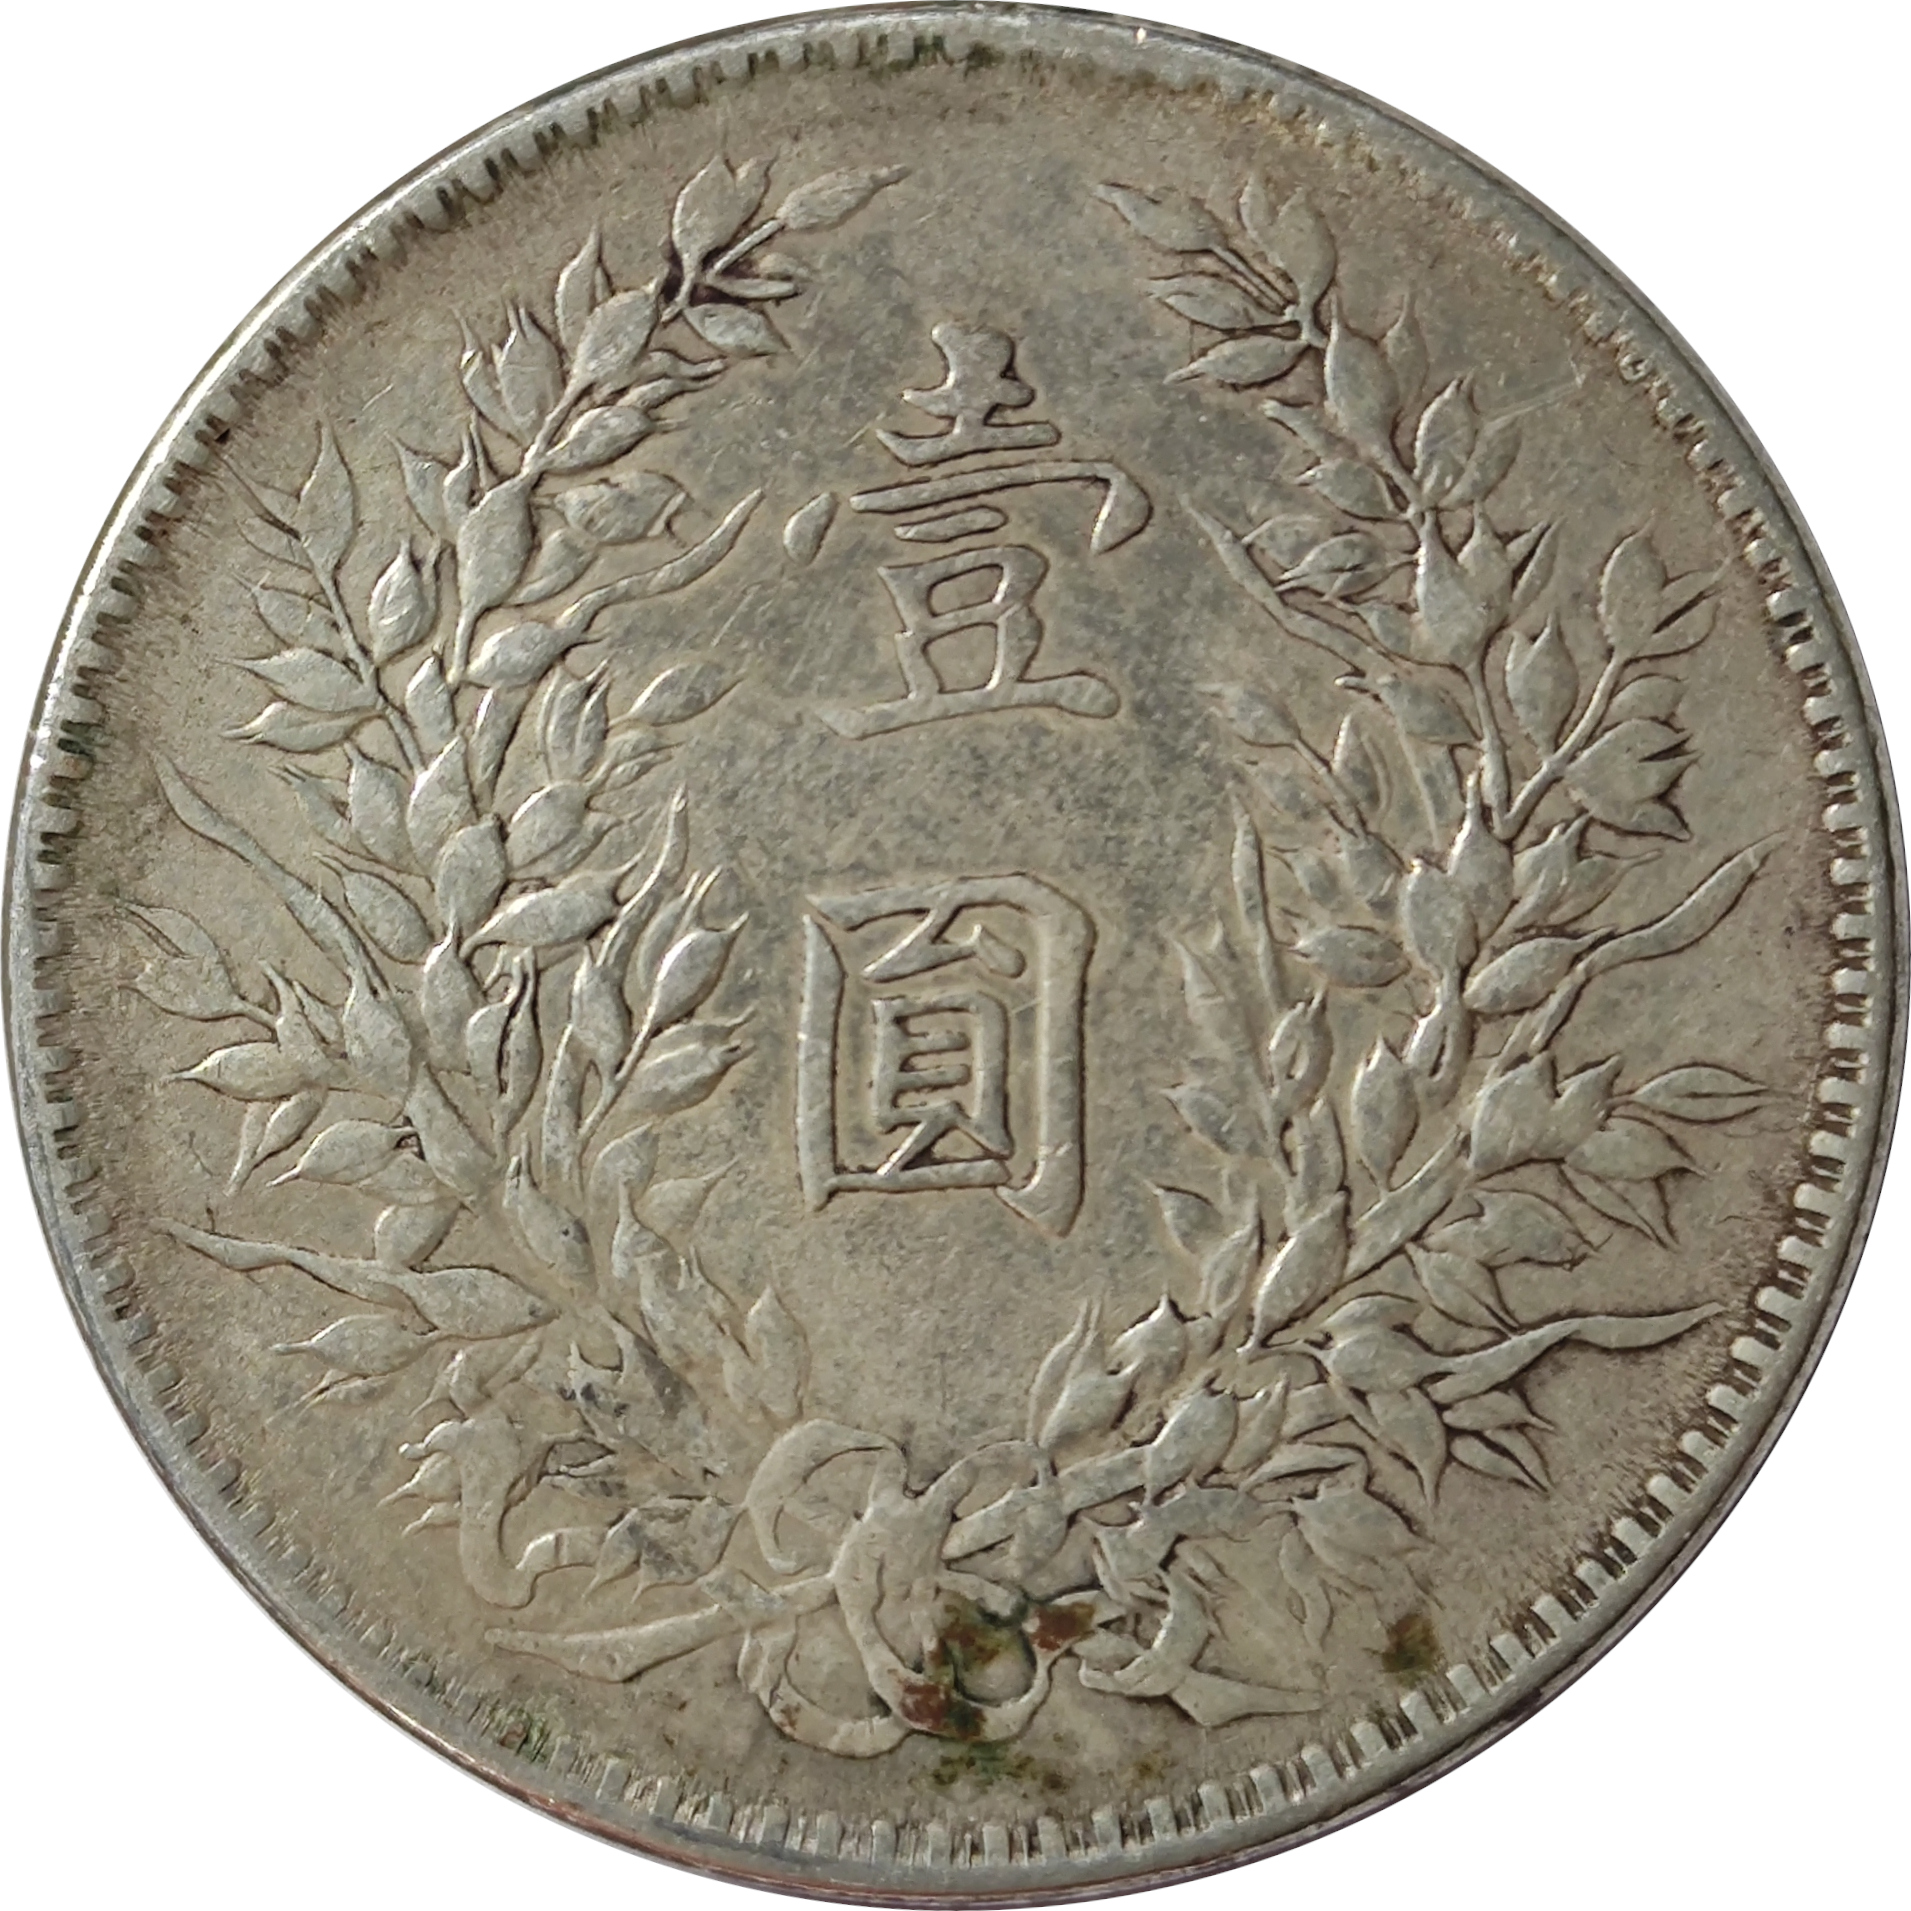 1 dollar - Yuan Shikai - Fatman